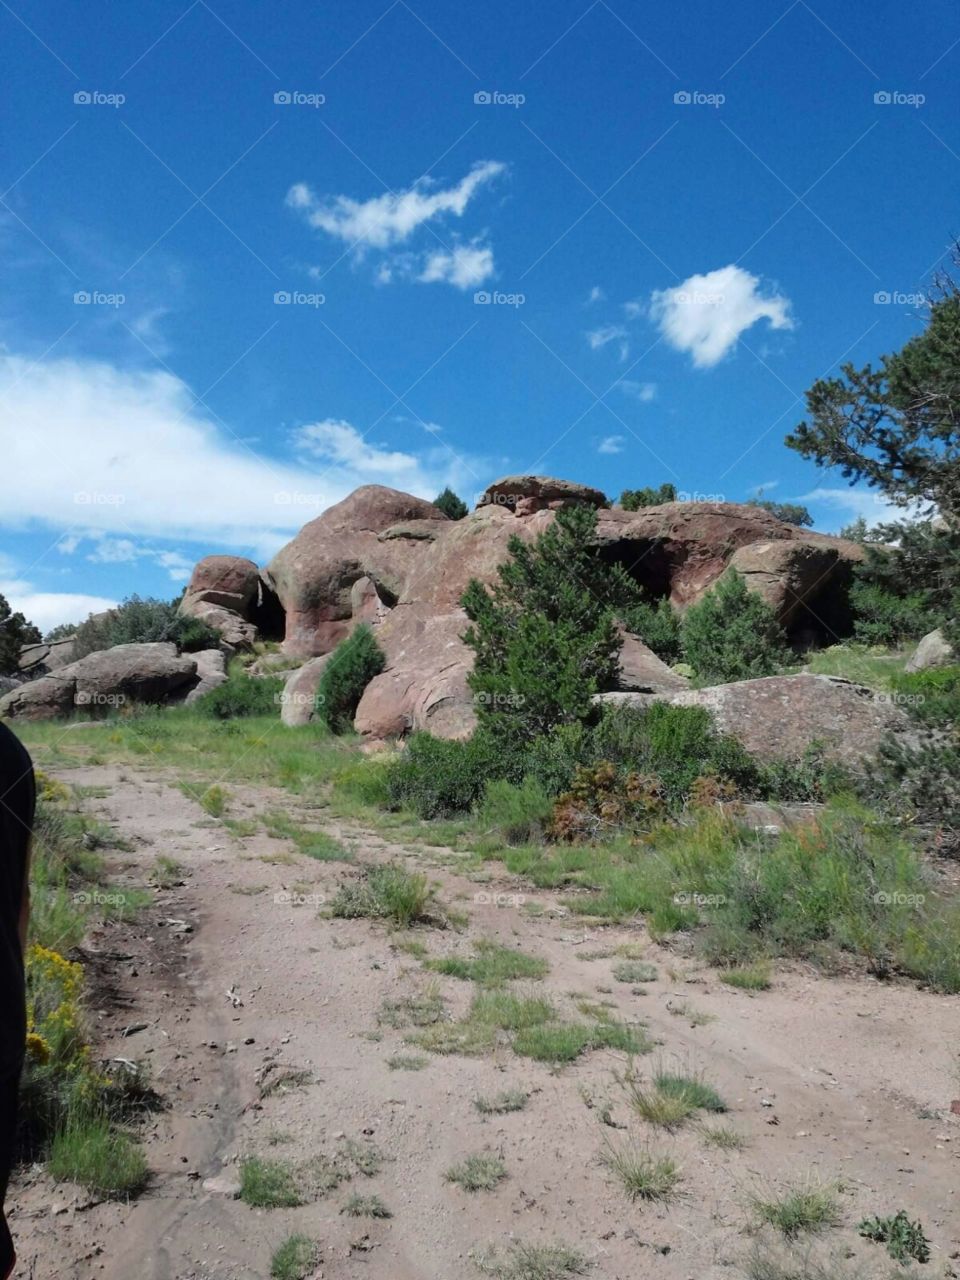 Elephant Rocks, Rio Grande county, Colorado